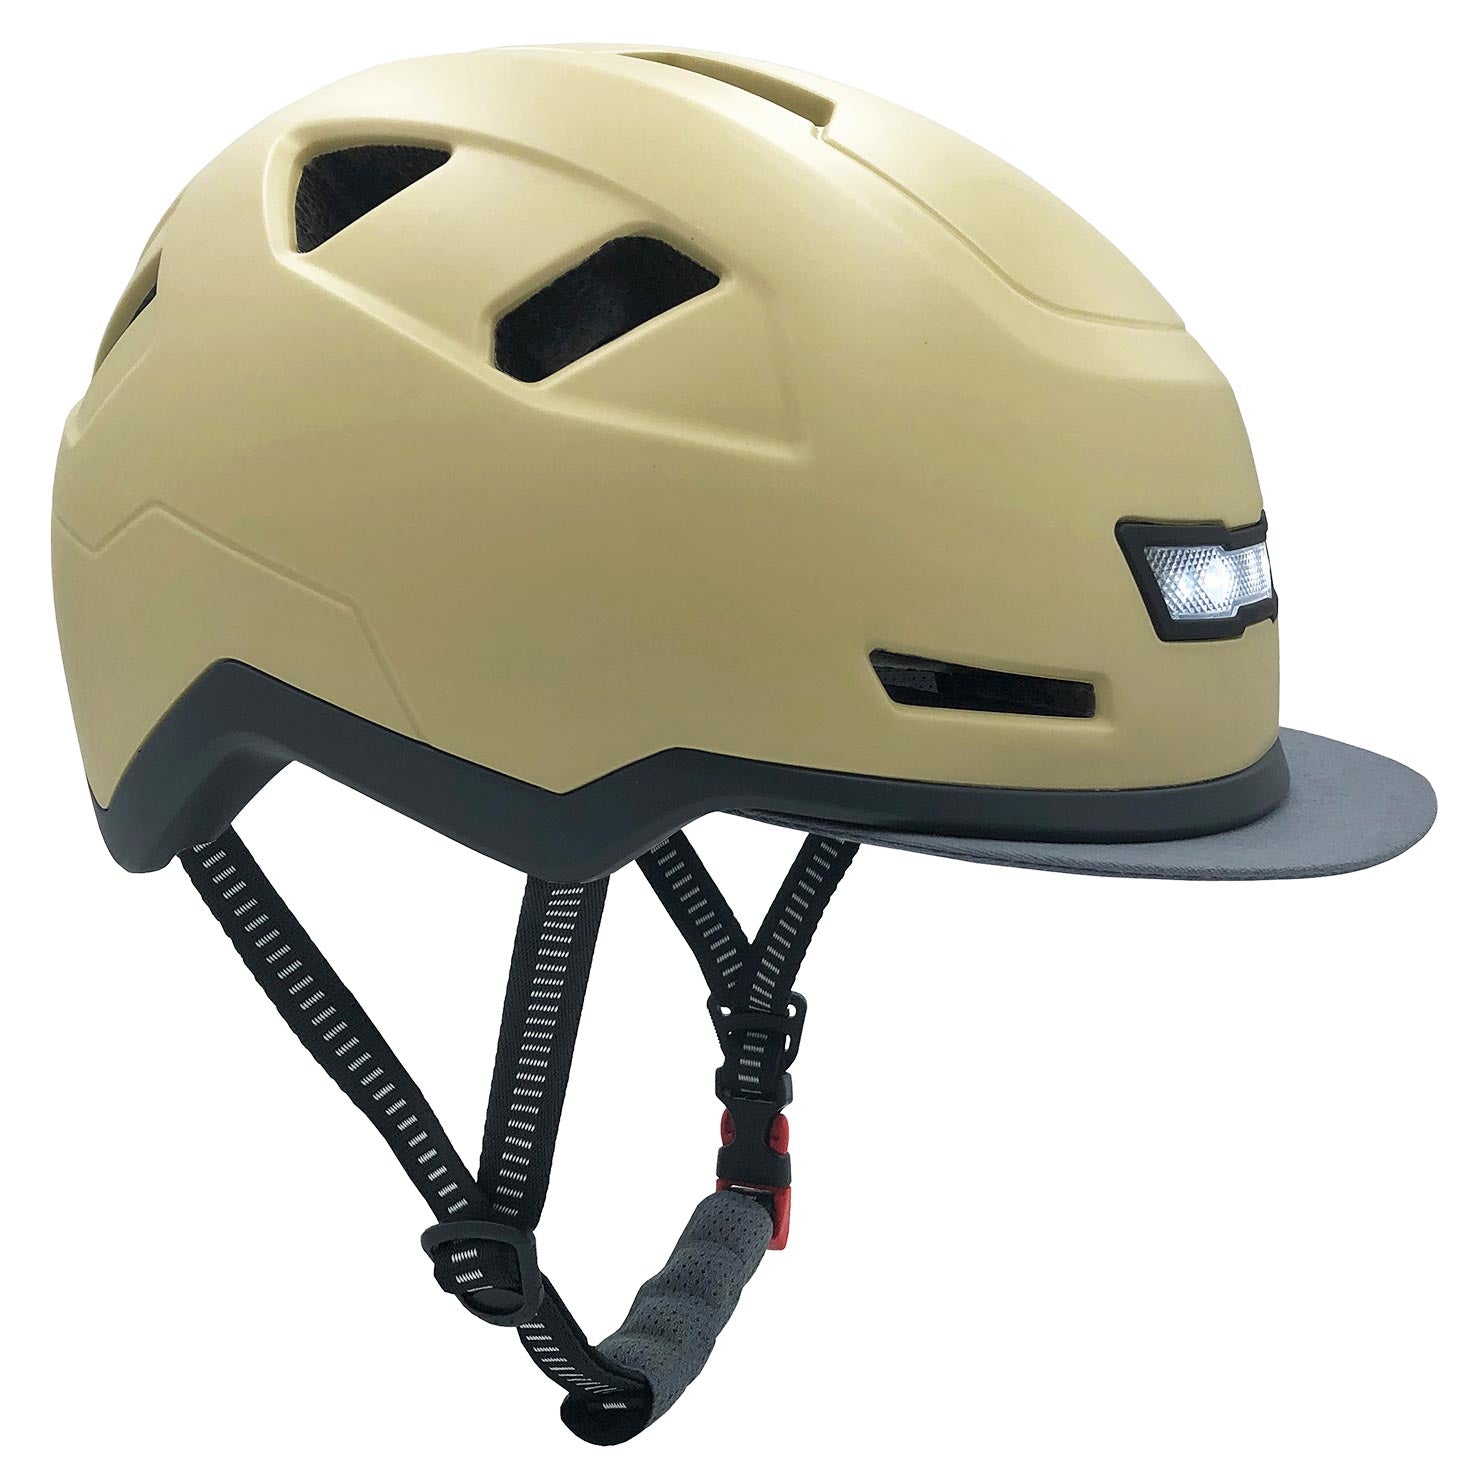 Premium e-Scooter and e-Bike Helmets 